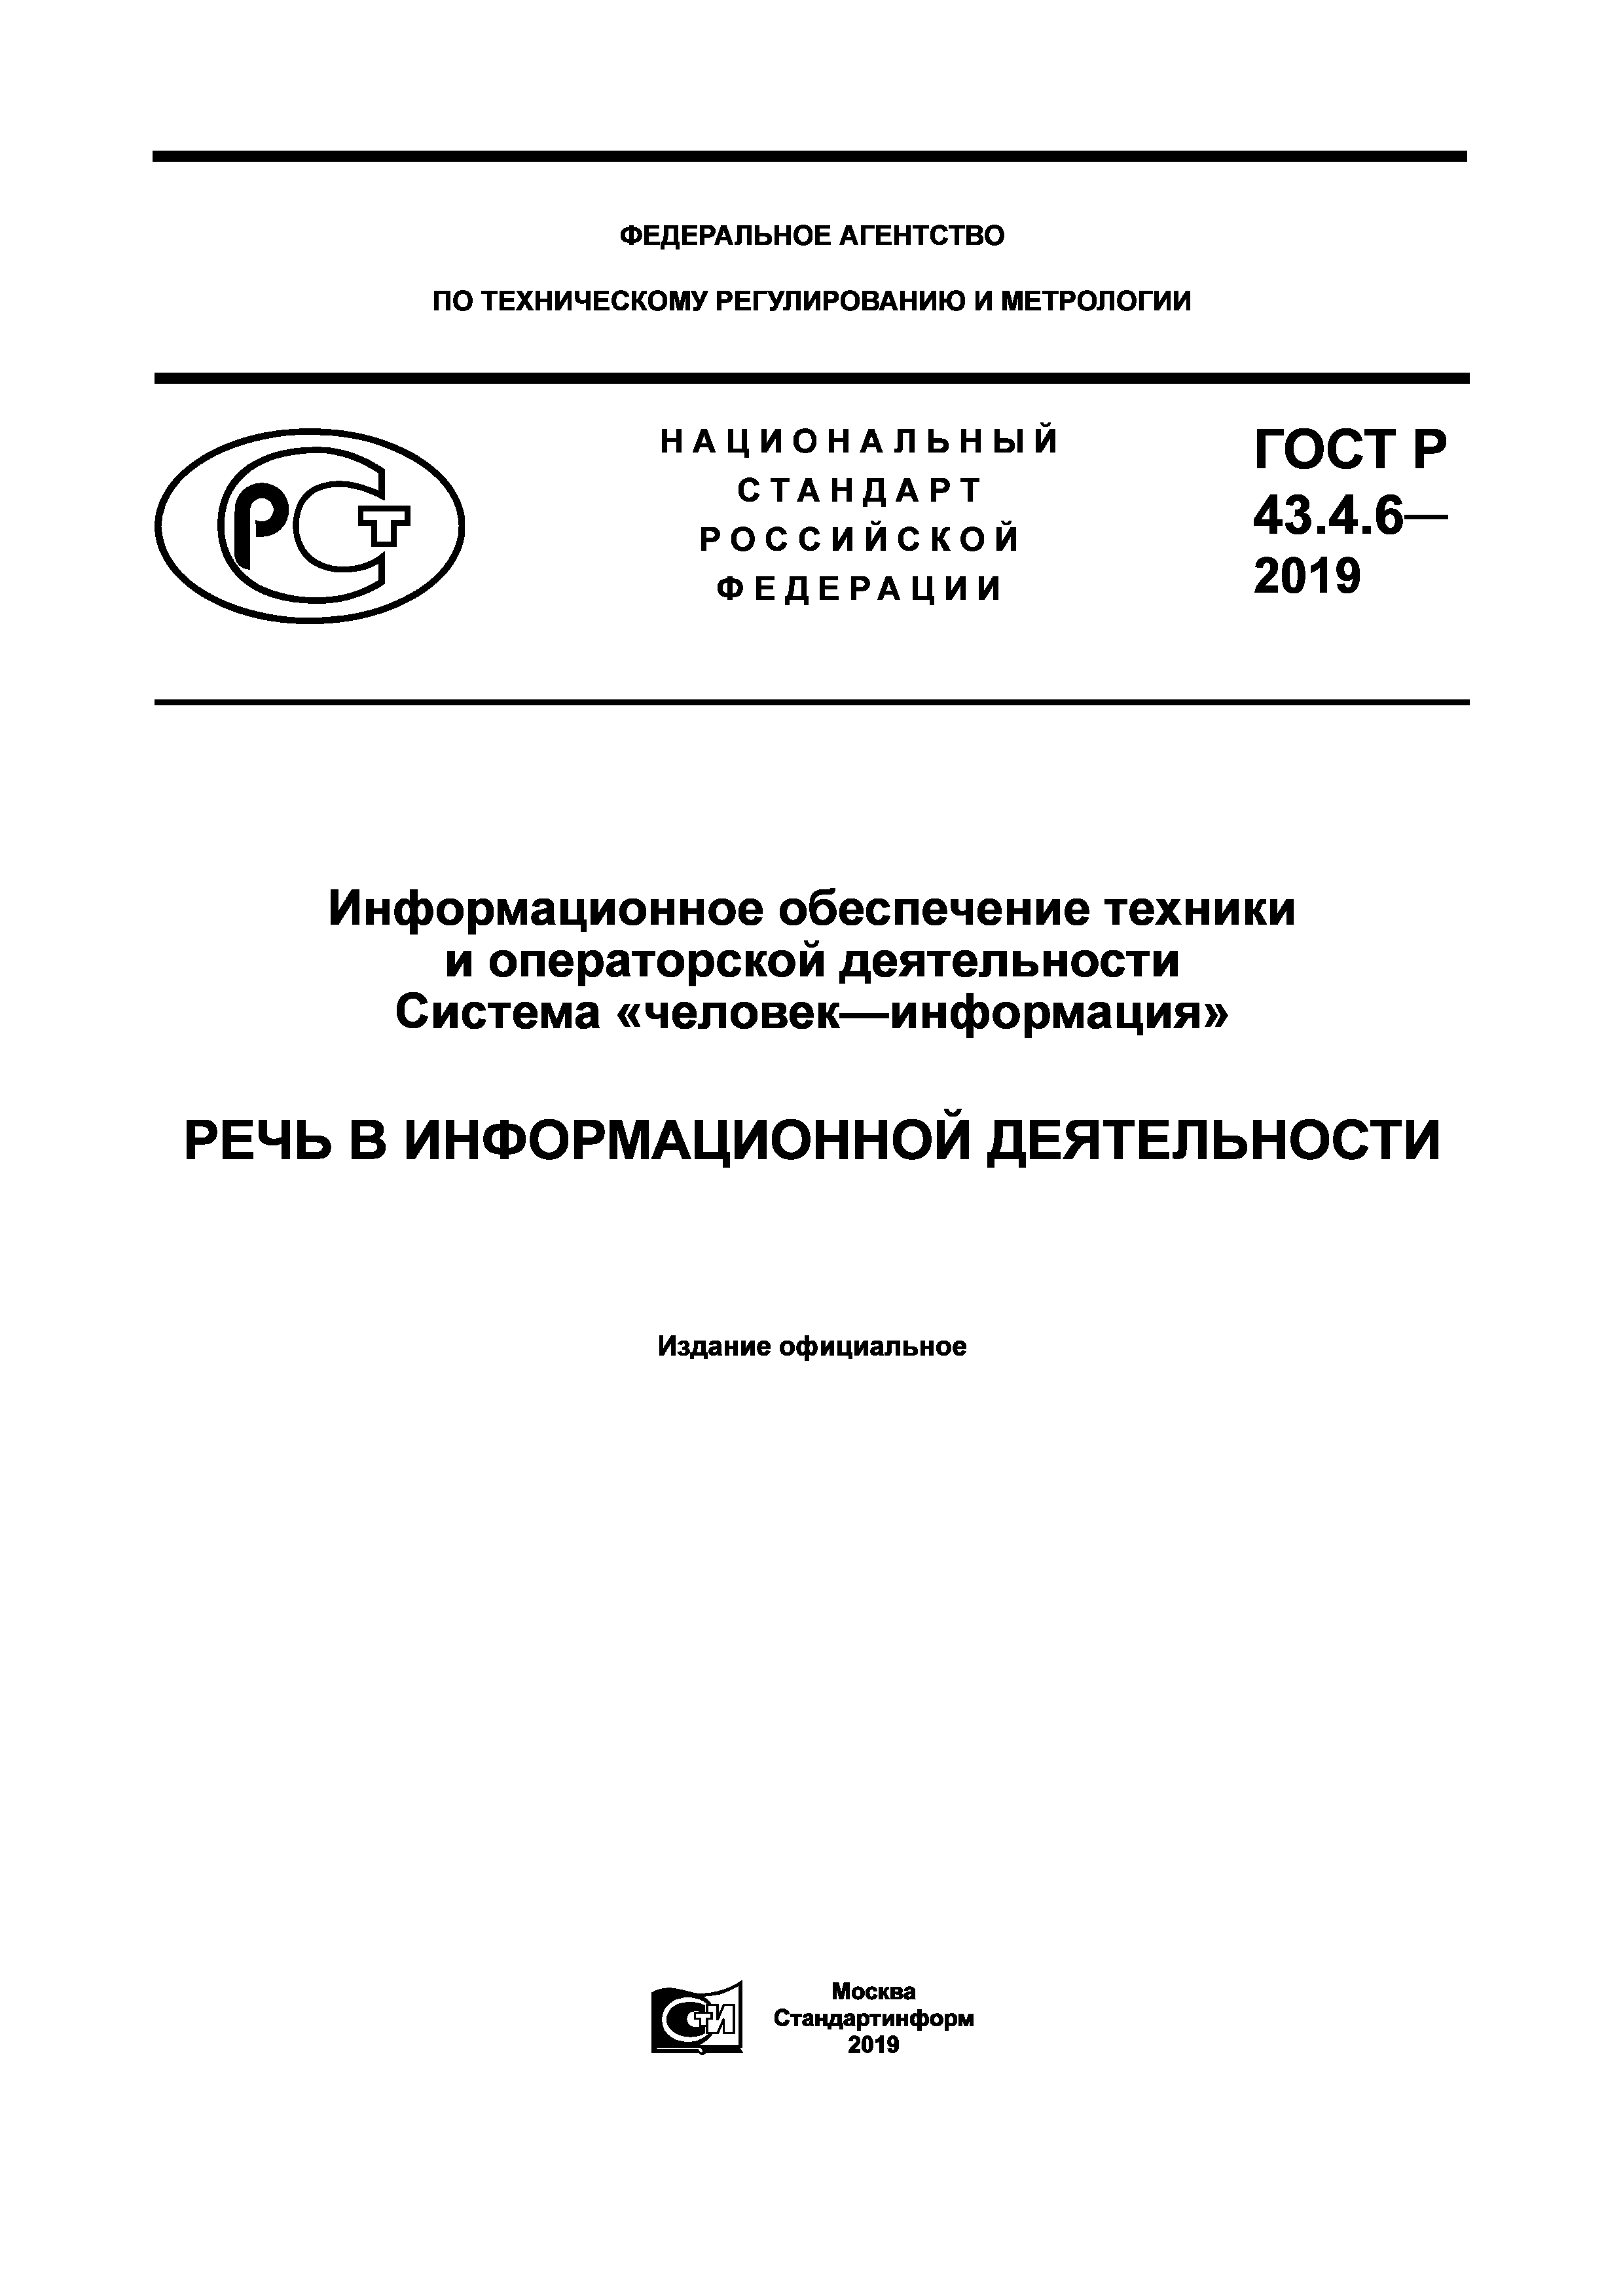 ГОСТ Р 43.4.6-2019